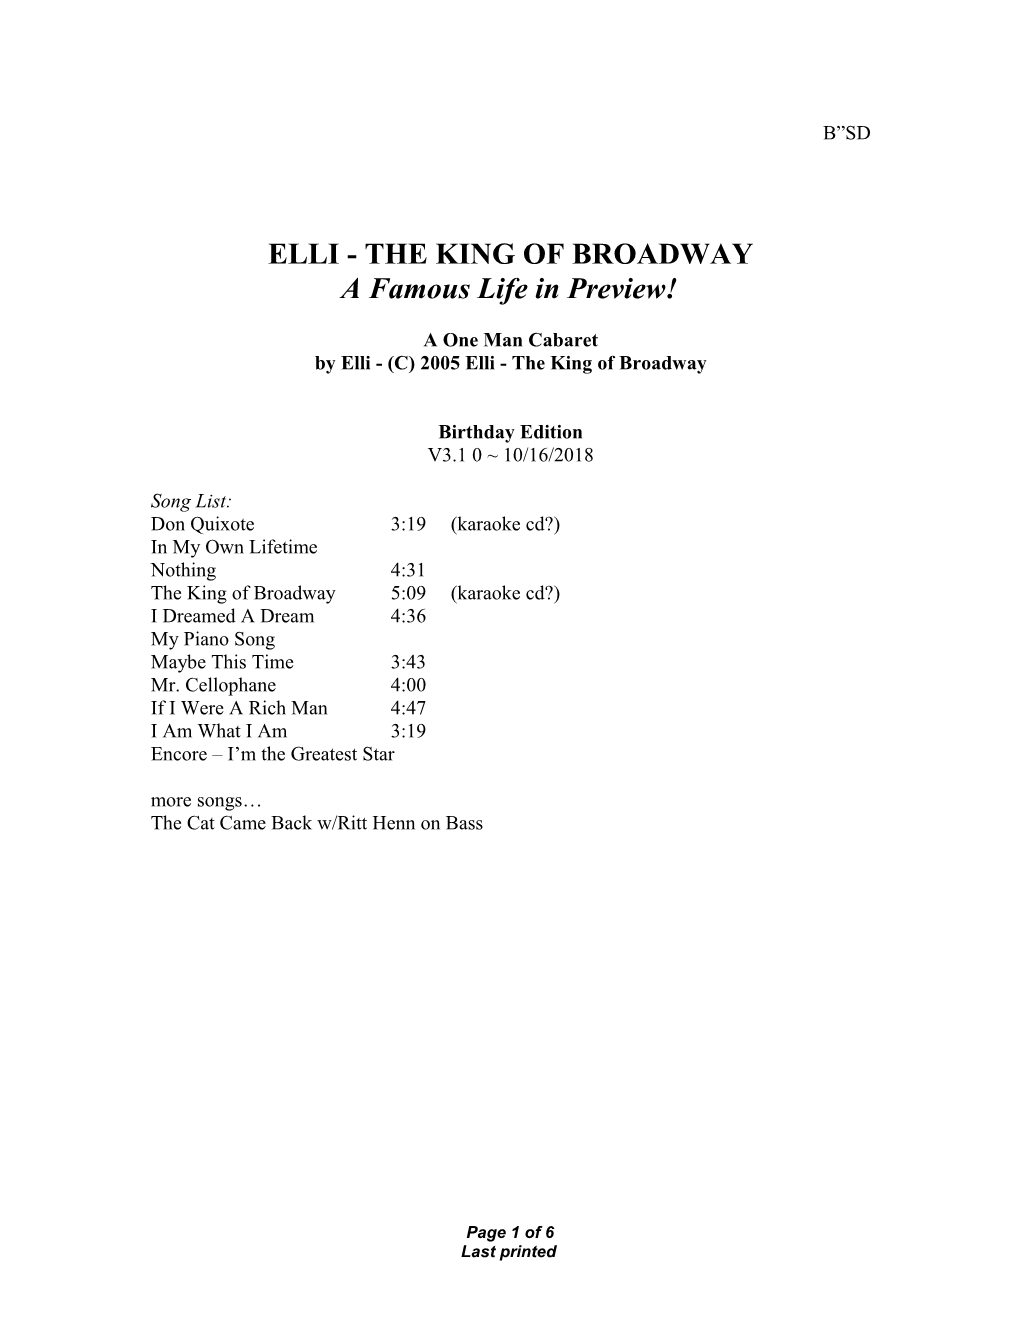 Elli - the King of Broadway